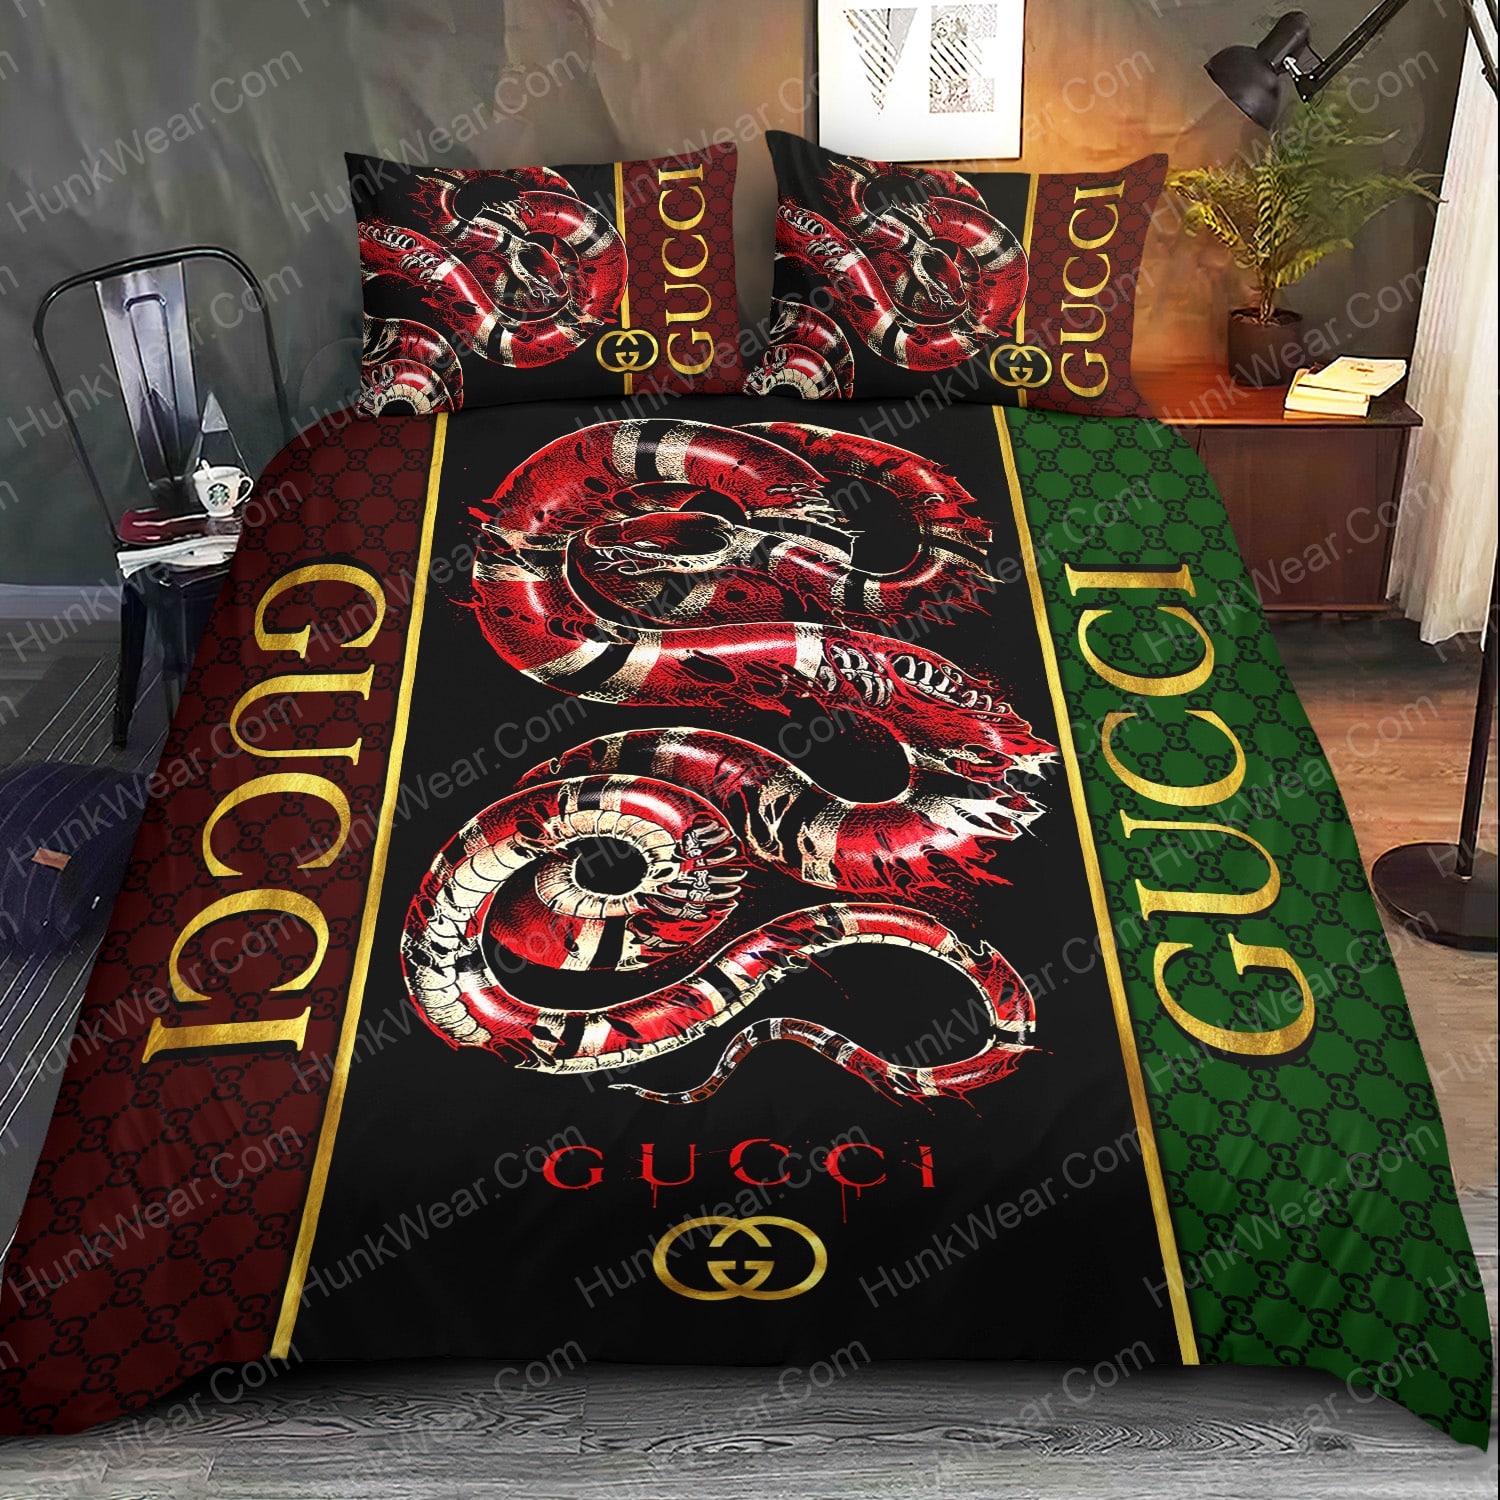 Gucci Snake Tattoo Bed Set Bedding Set